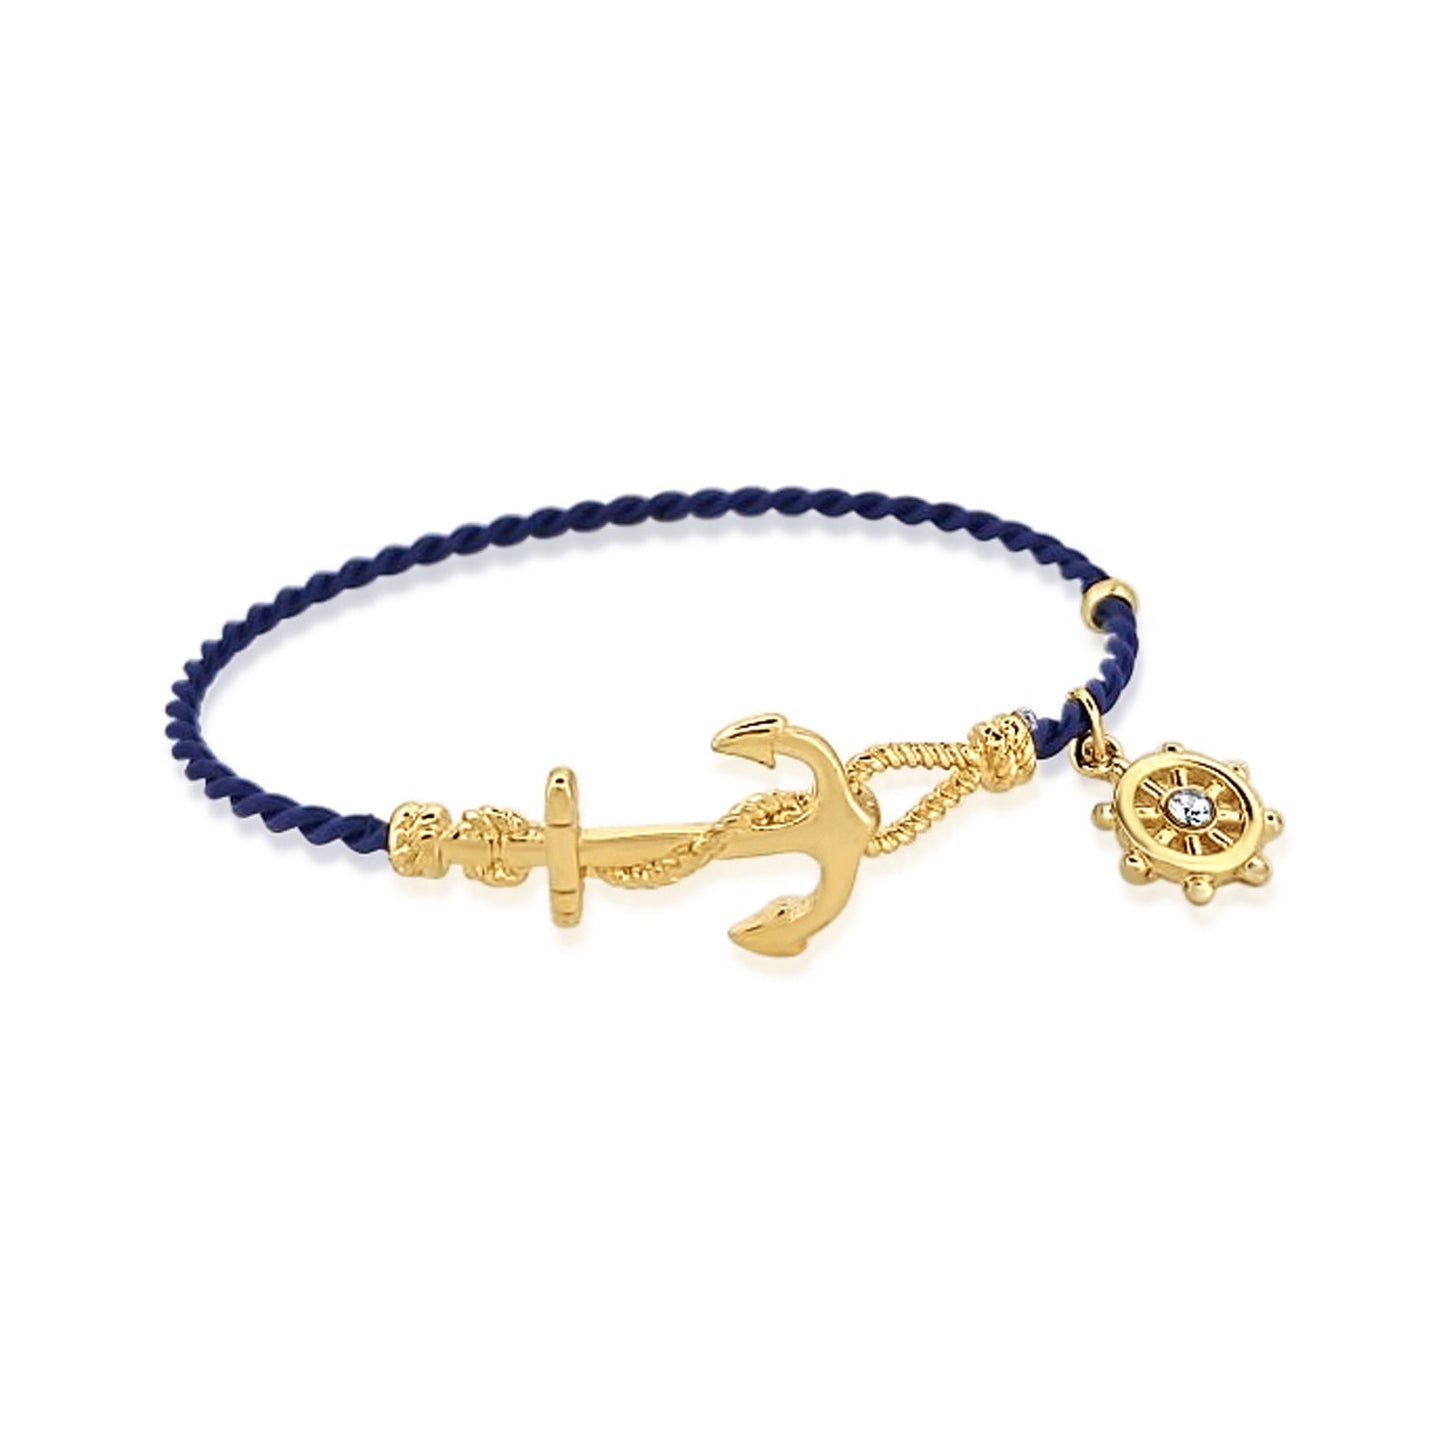 BESHEEK Goldtone and Blue Anchor and Hook Clasp Bracelet| Handmade Hypoallergenic Boho Beach Gala Wedding Style Jewelry